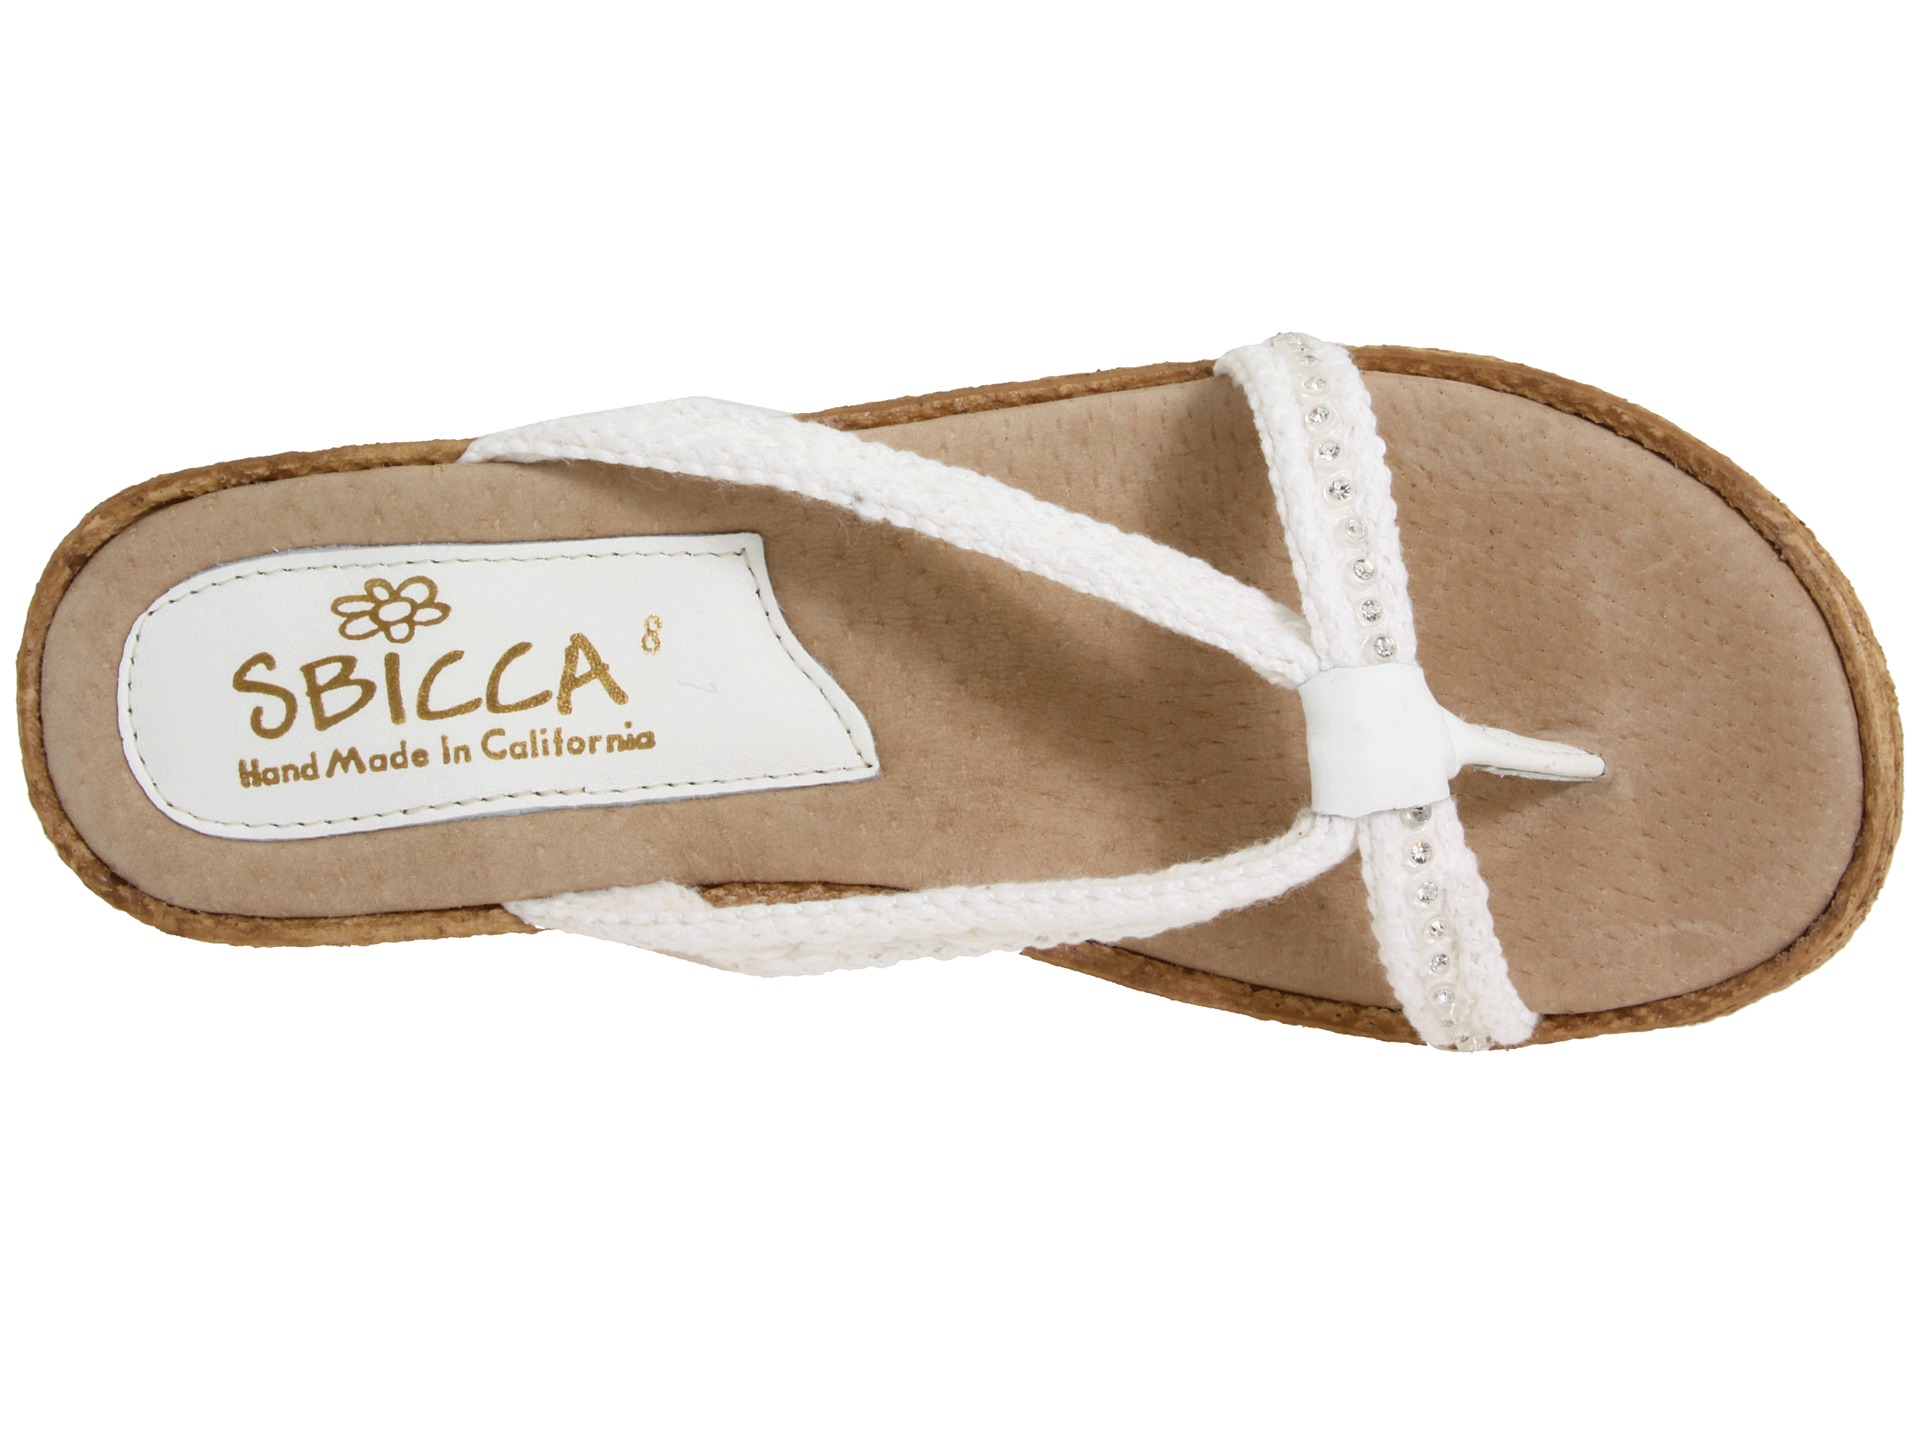 Sbicca Luxury - Zappos Free Shipping BOTH Ways